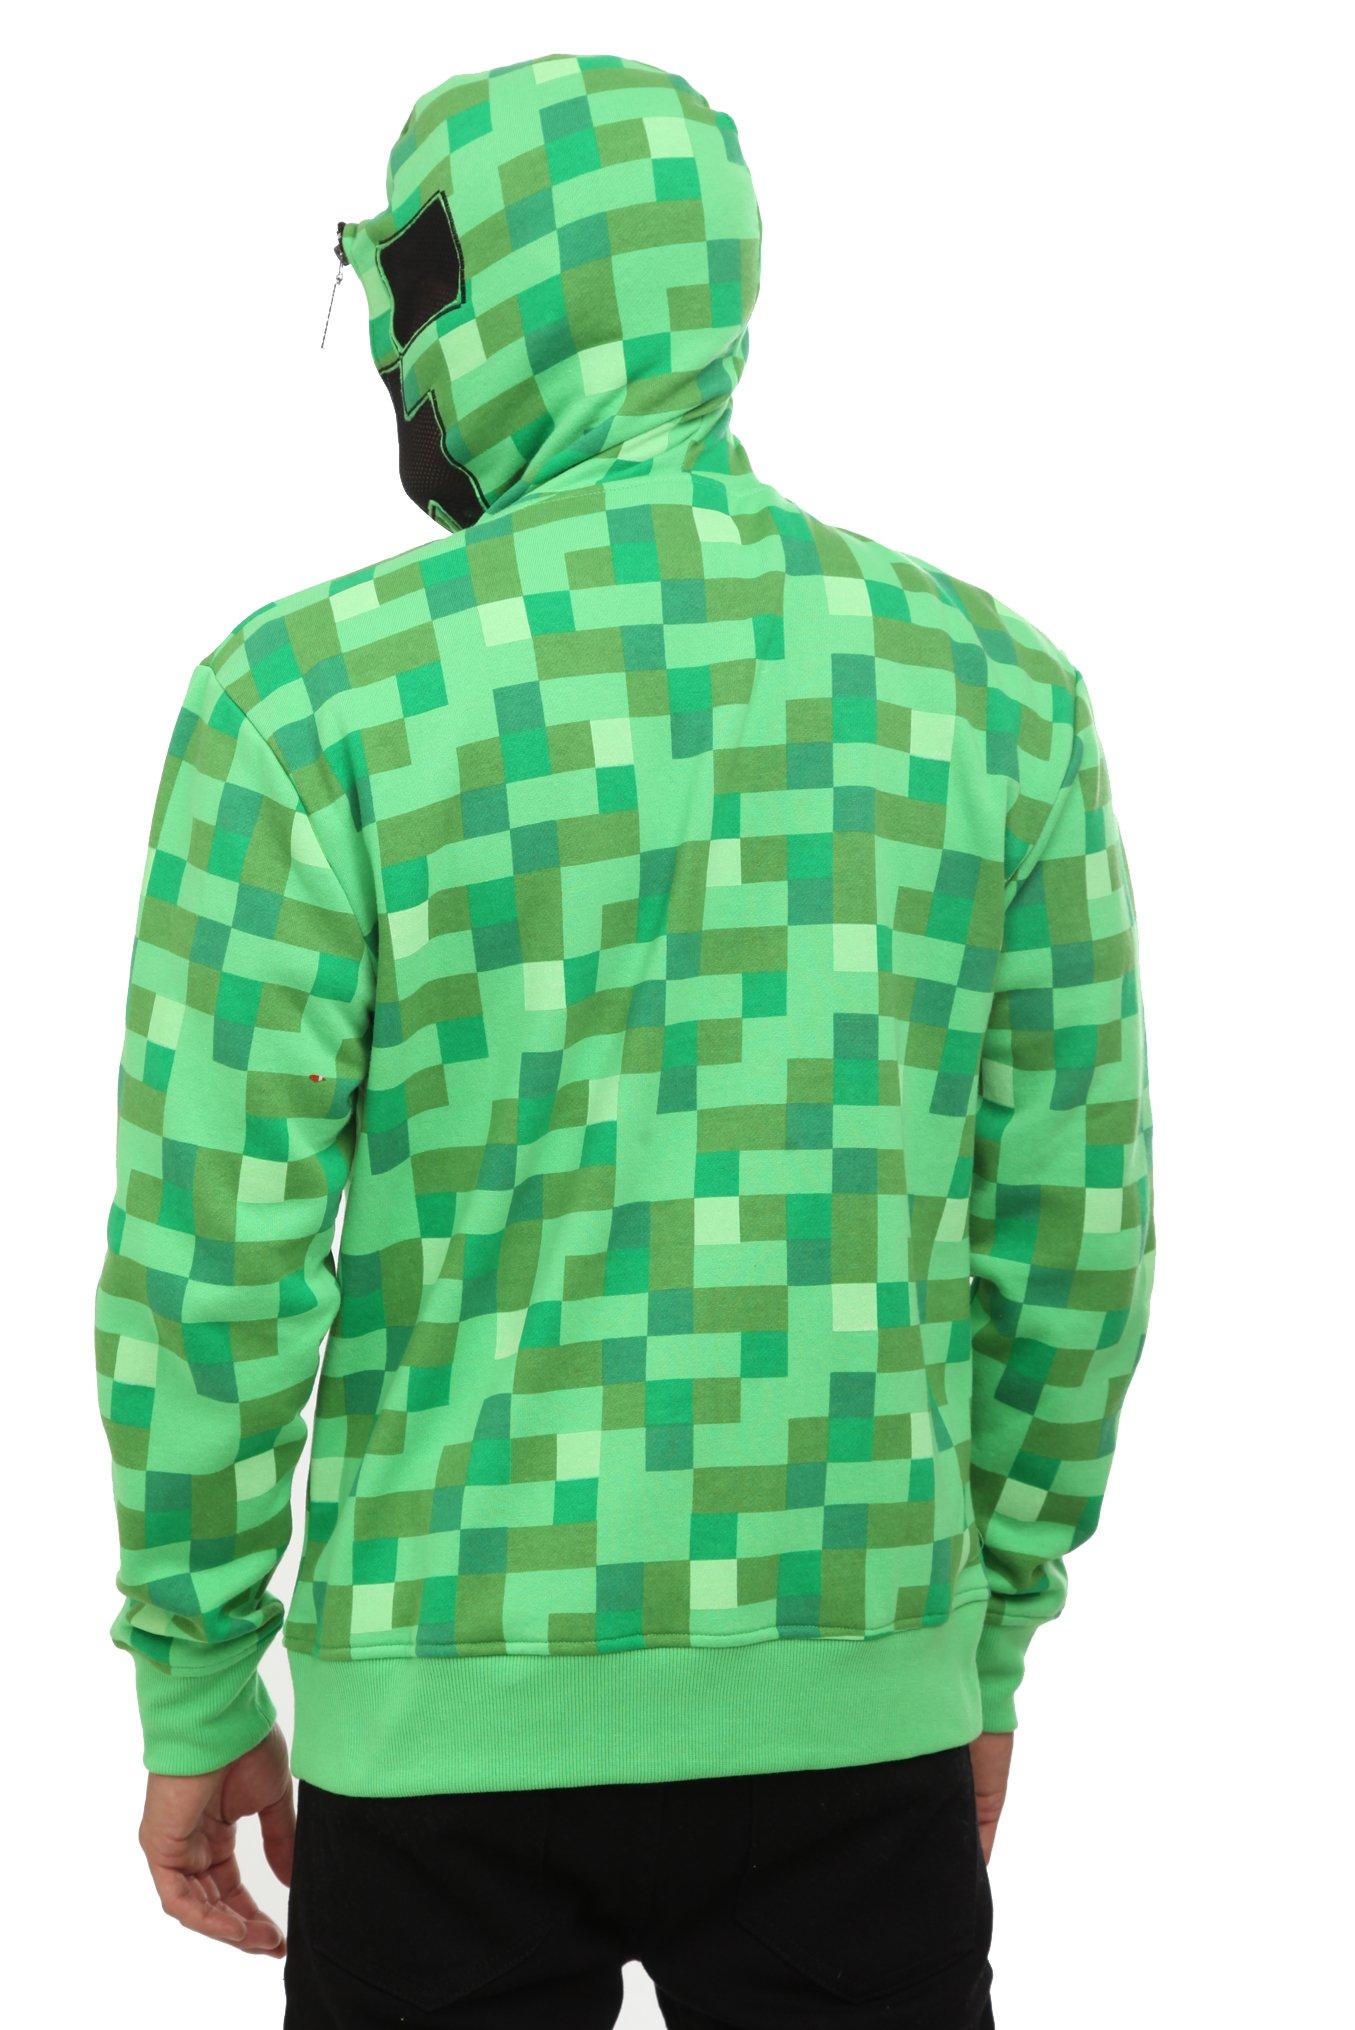 Jinx Minecraft Creeper Costume Hoodie | Hot Topic